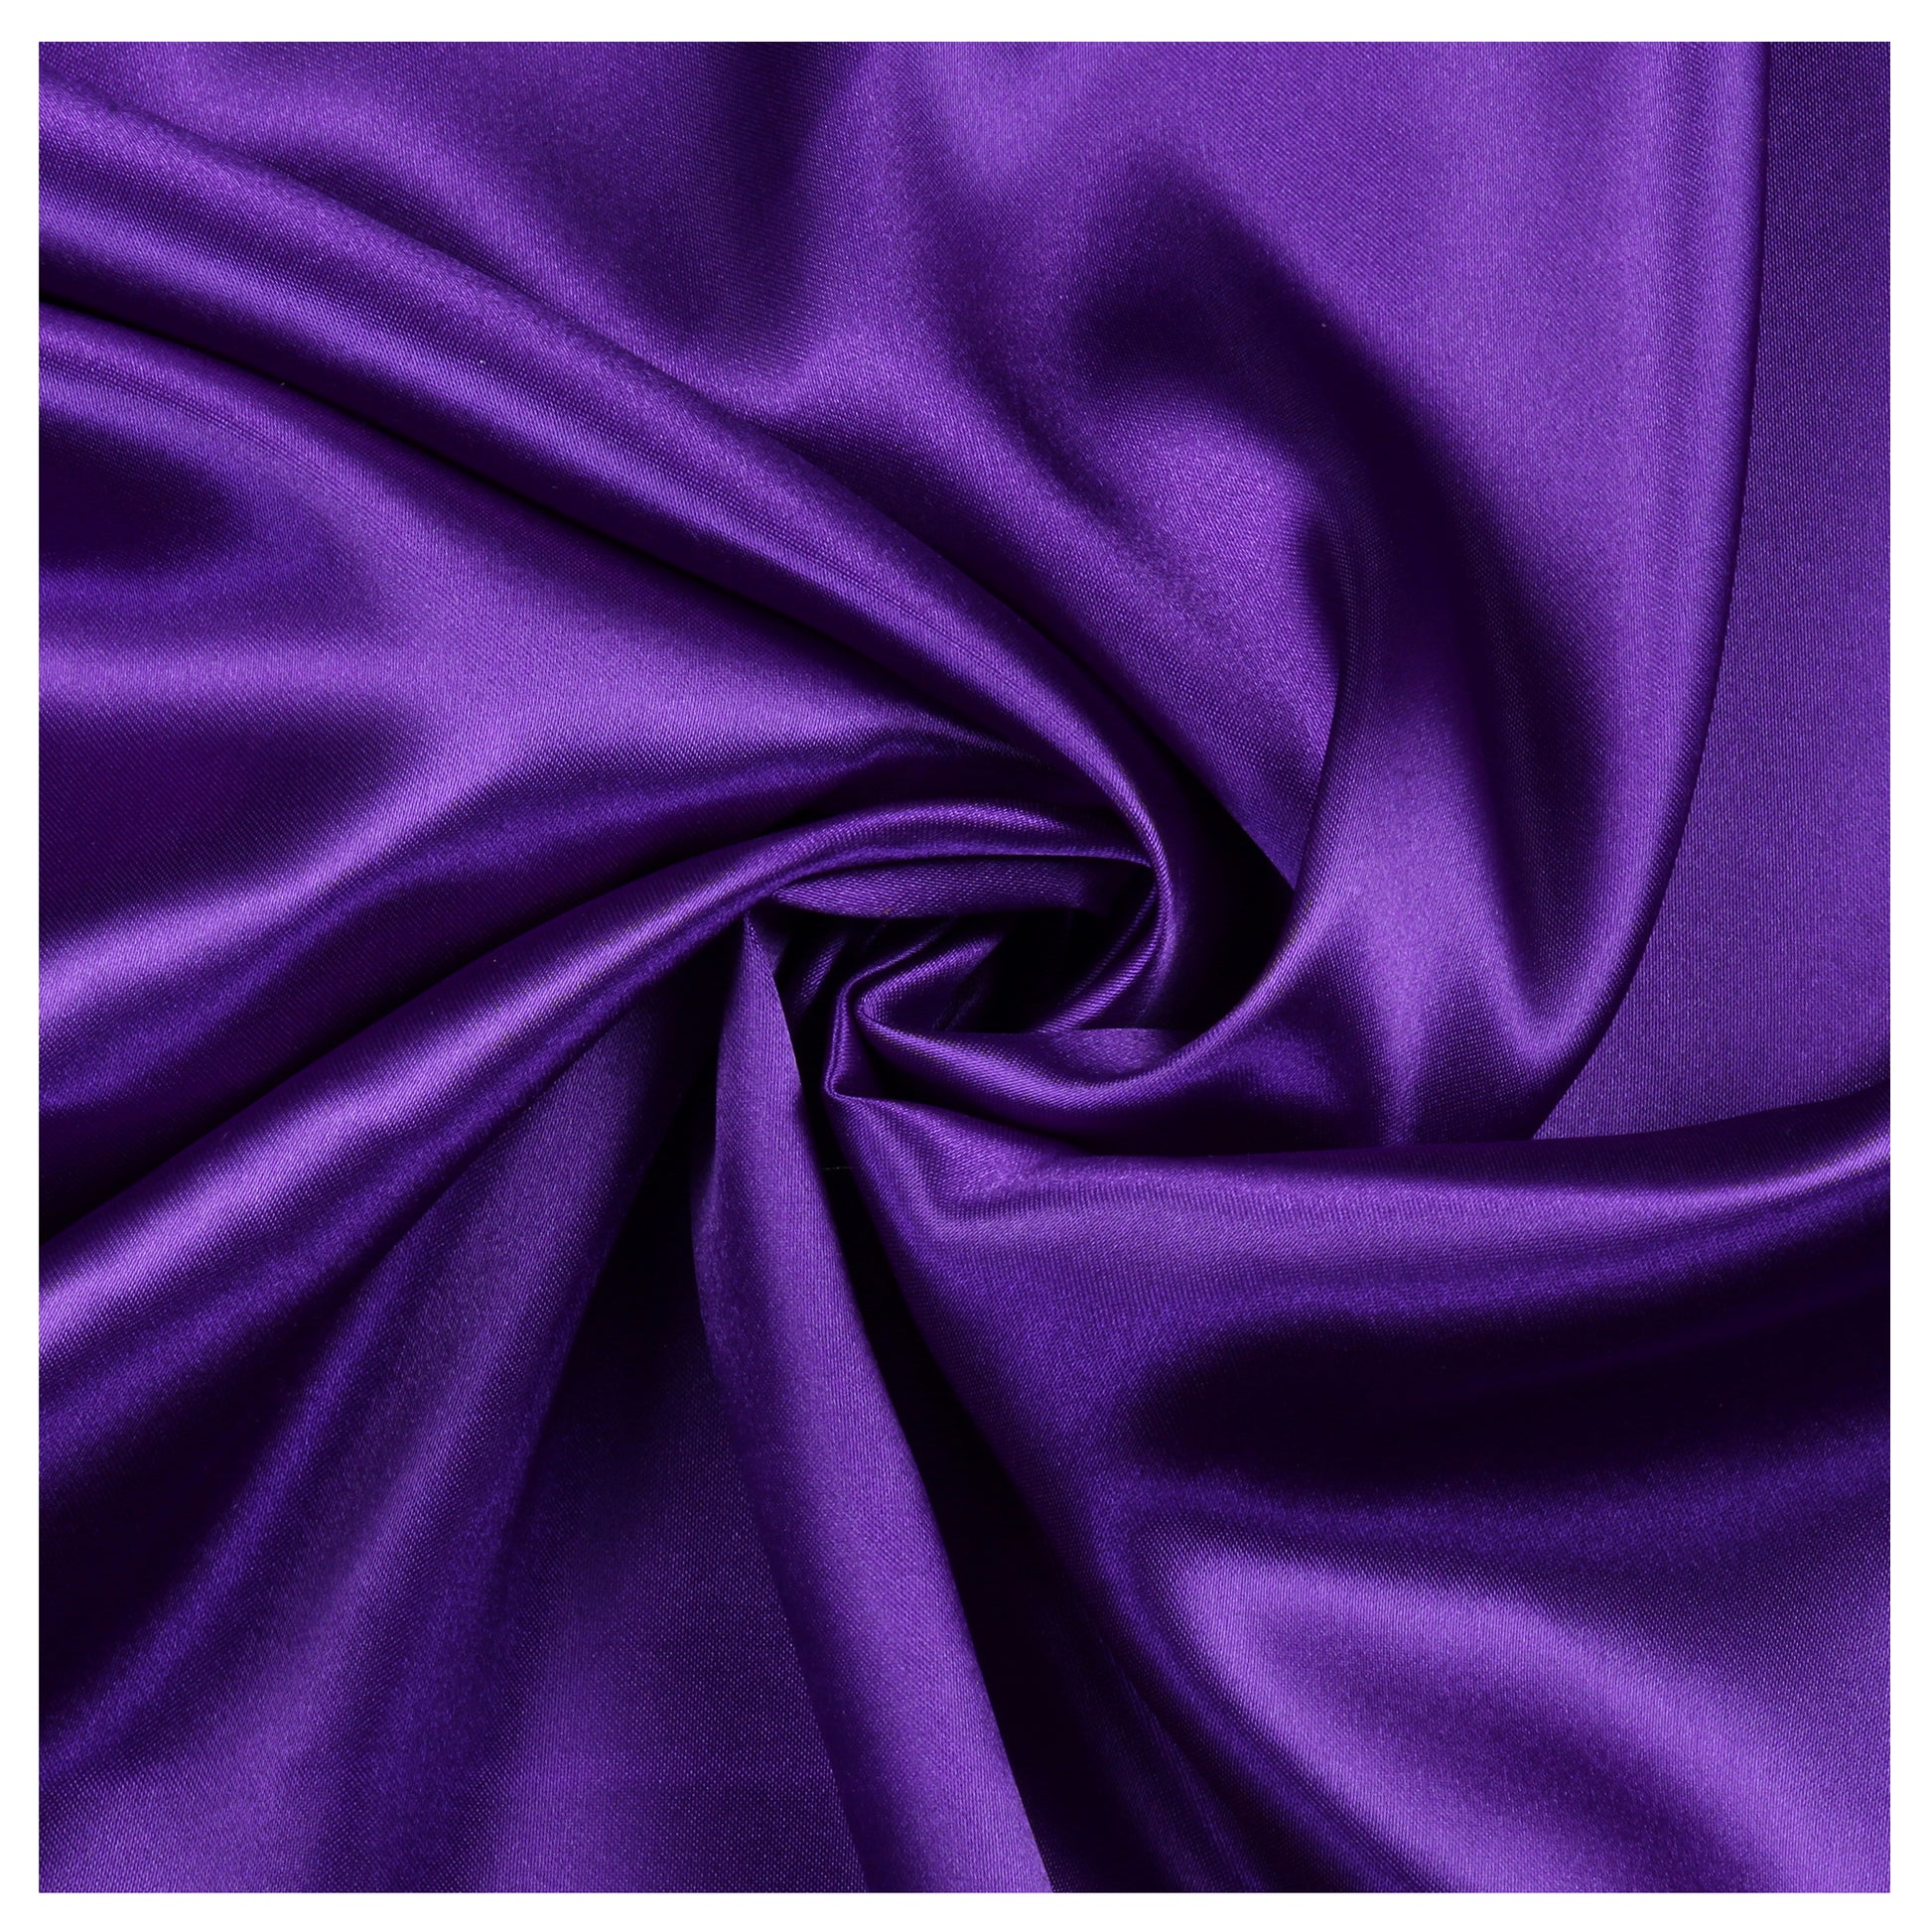 Cadbury Purple,968a3a78-d540-4c22-8644-001b6c7a121c